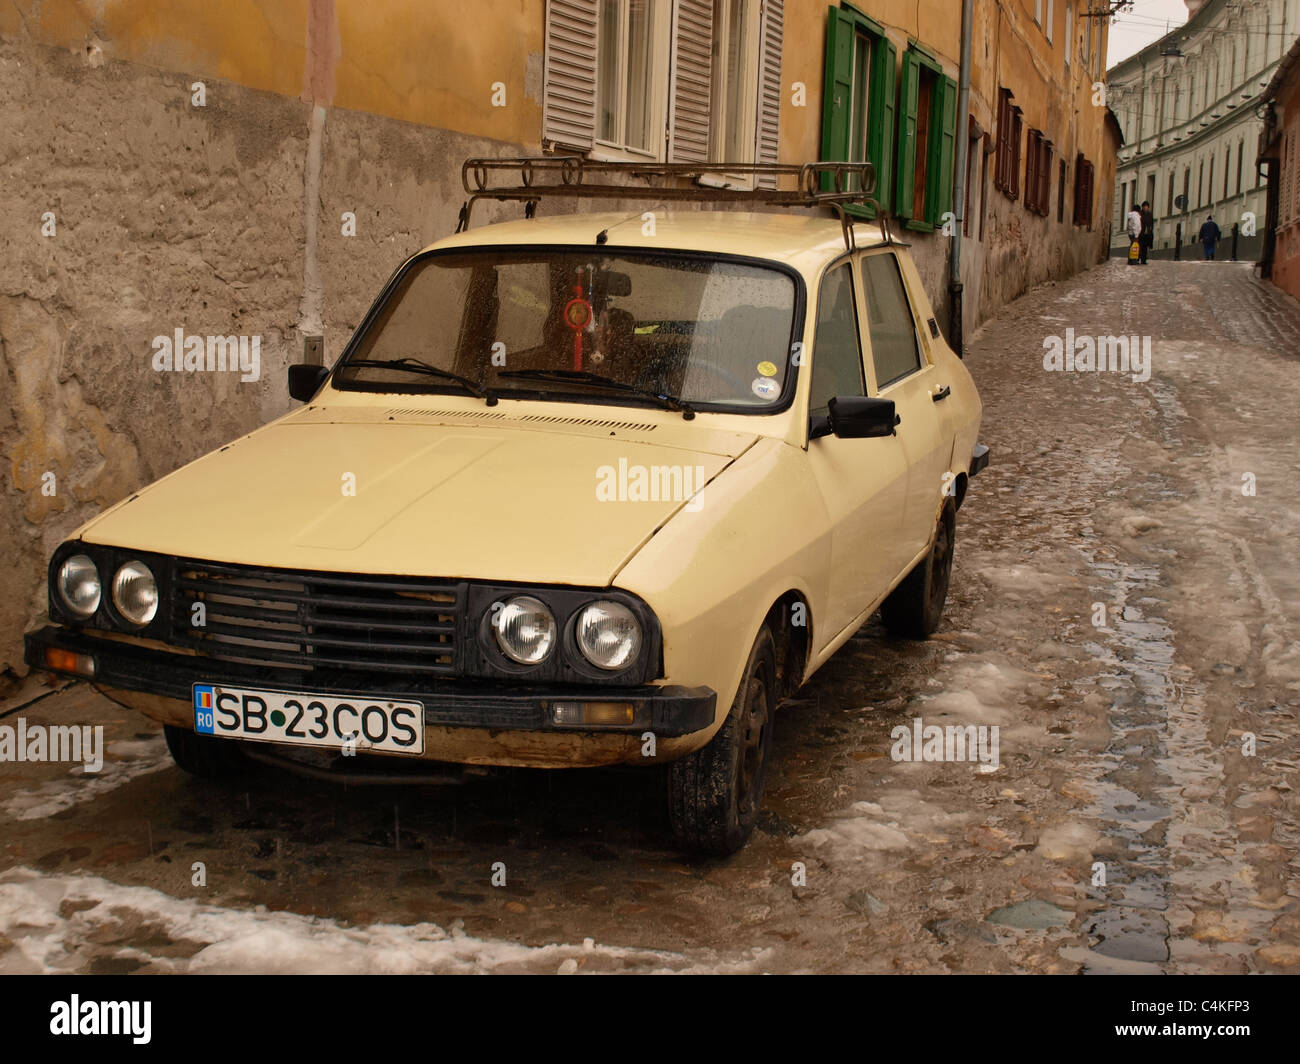 Dacia car hi-res stock photography and images - Alamy